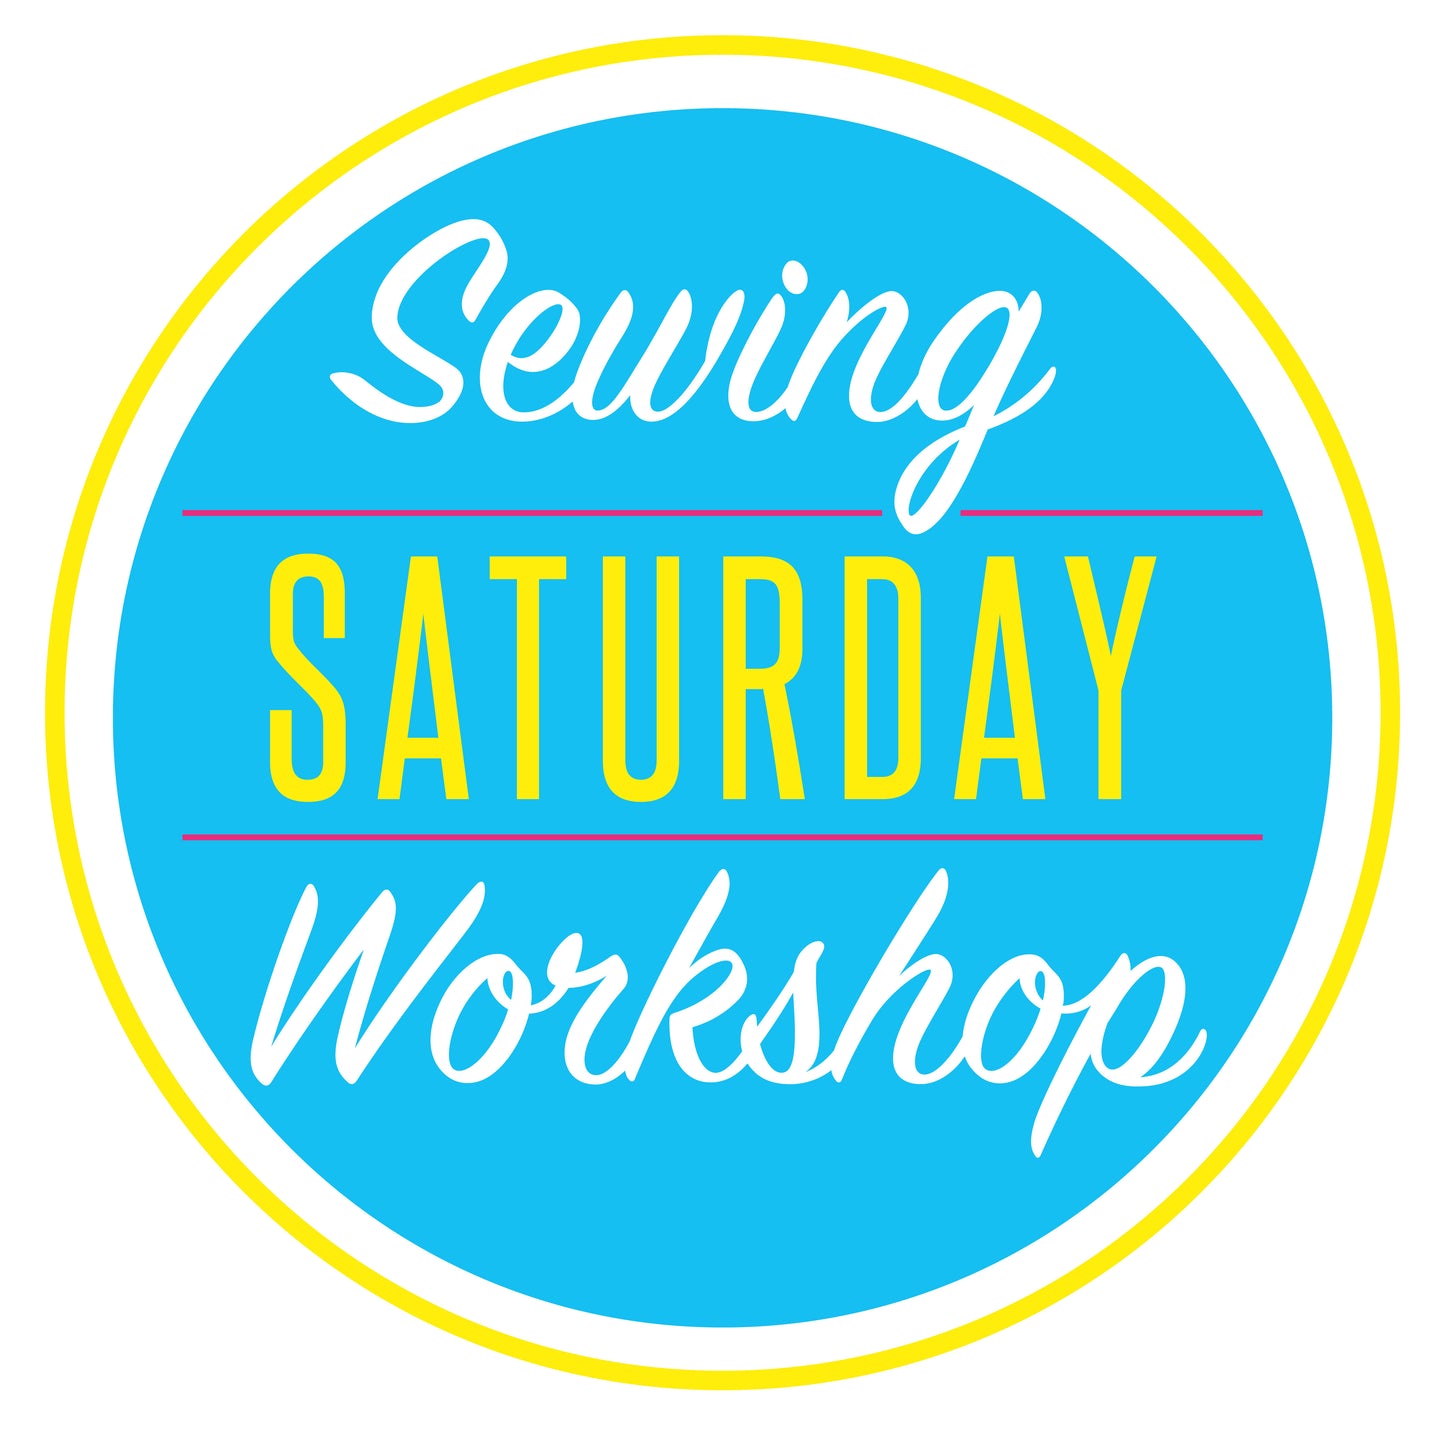 Sewing Workshop: Saturday, July 27, 9am-3pm